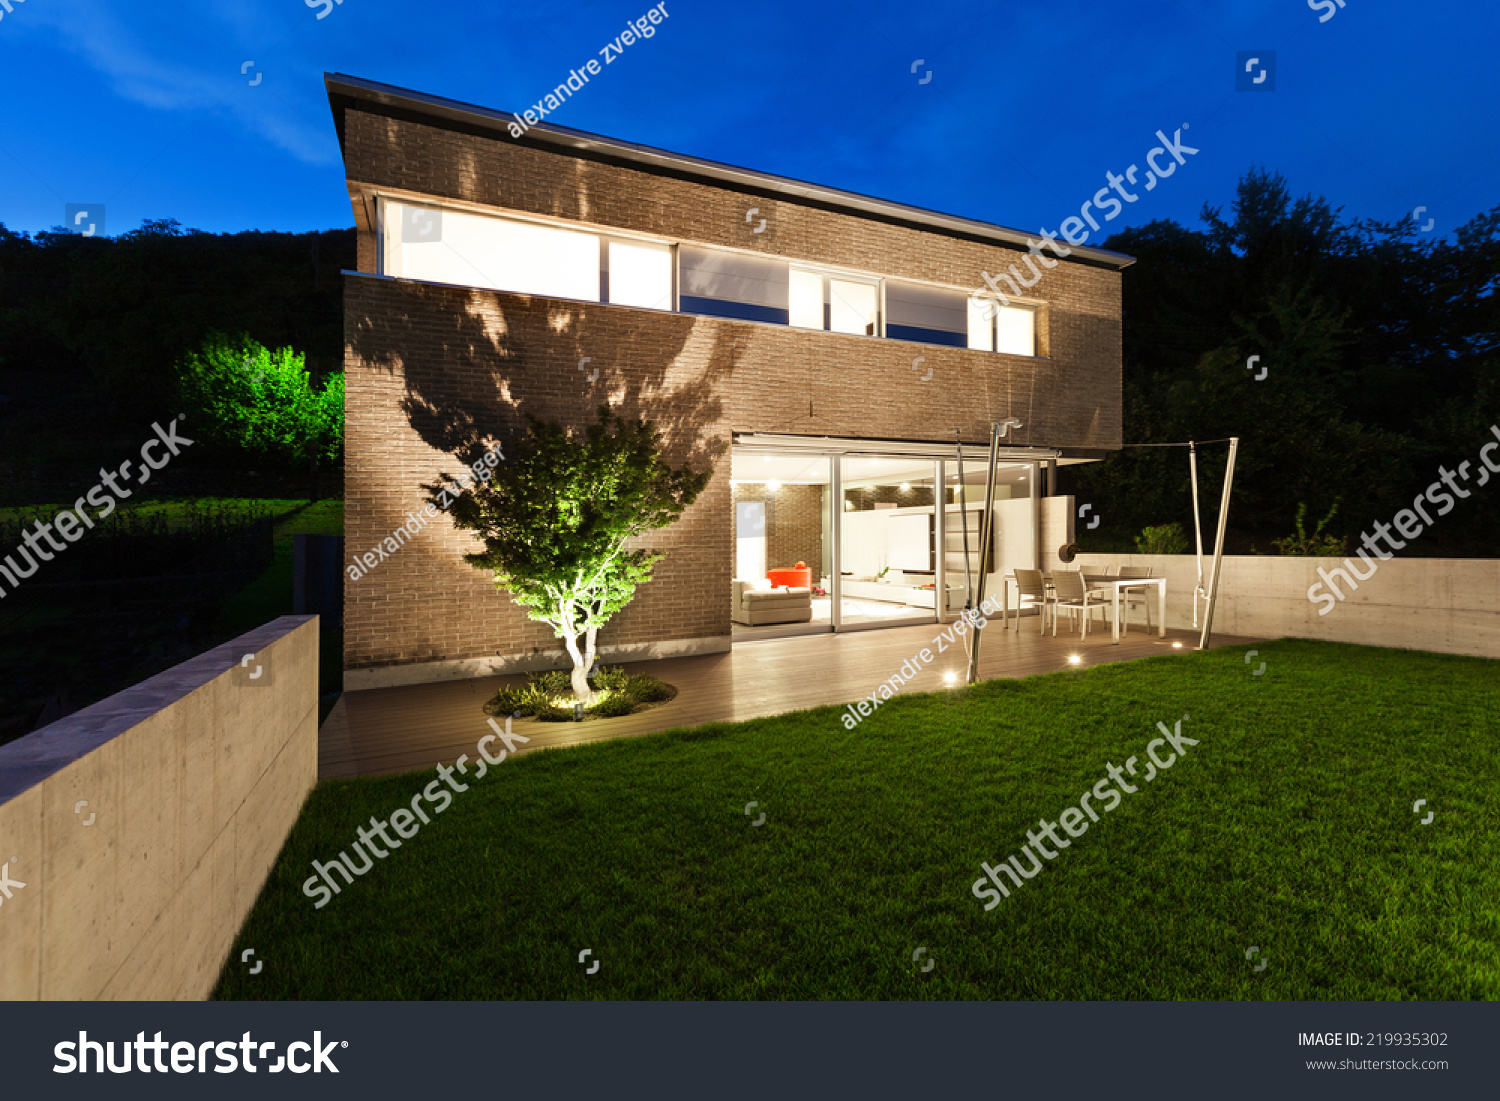 Architecture modern design, beautiful house, night scene #219935302